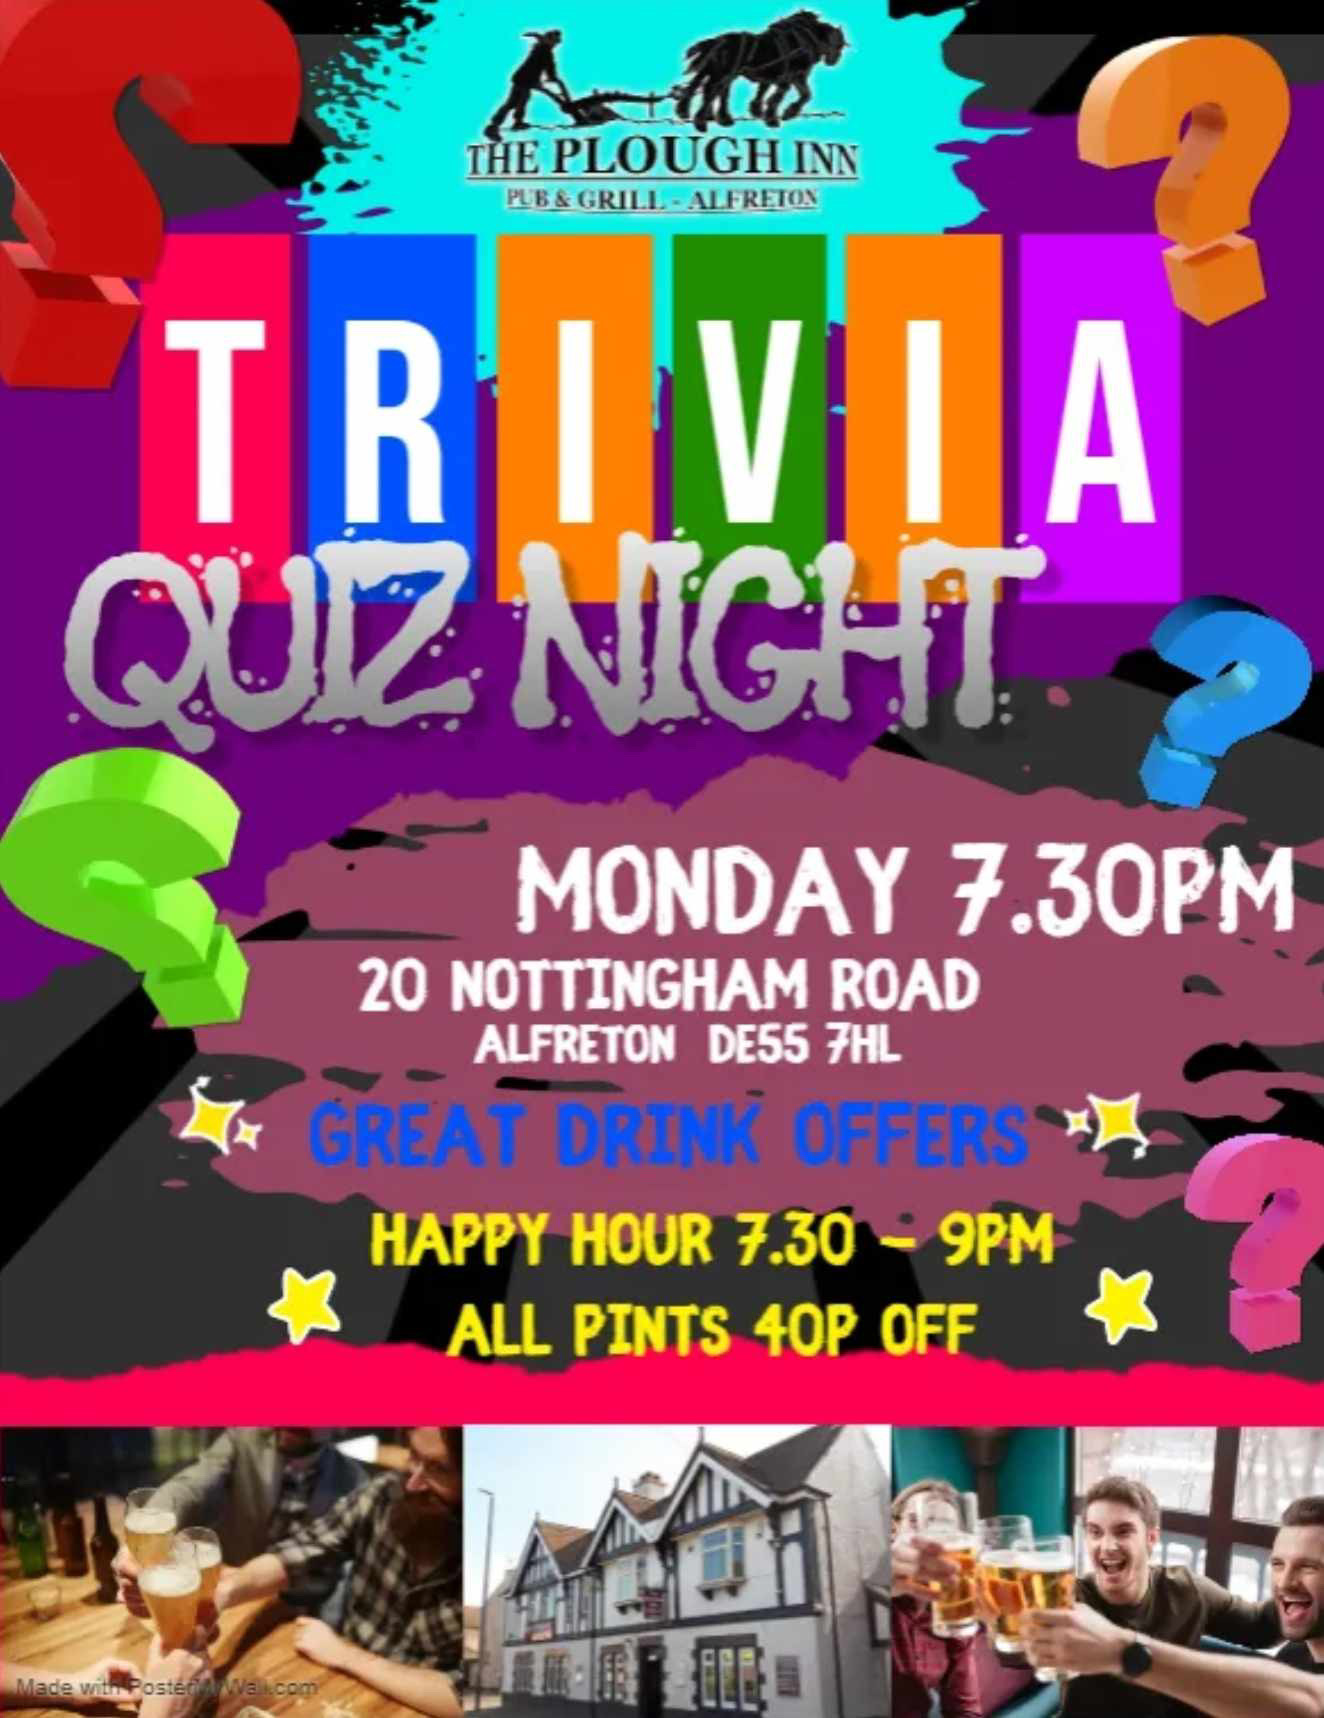 The Plough Inn pub in Alfreton will launch a new weekly Trivia Quiz Night